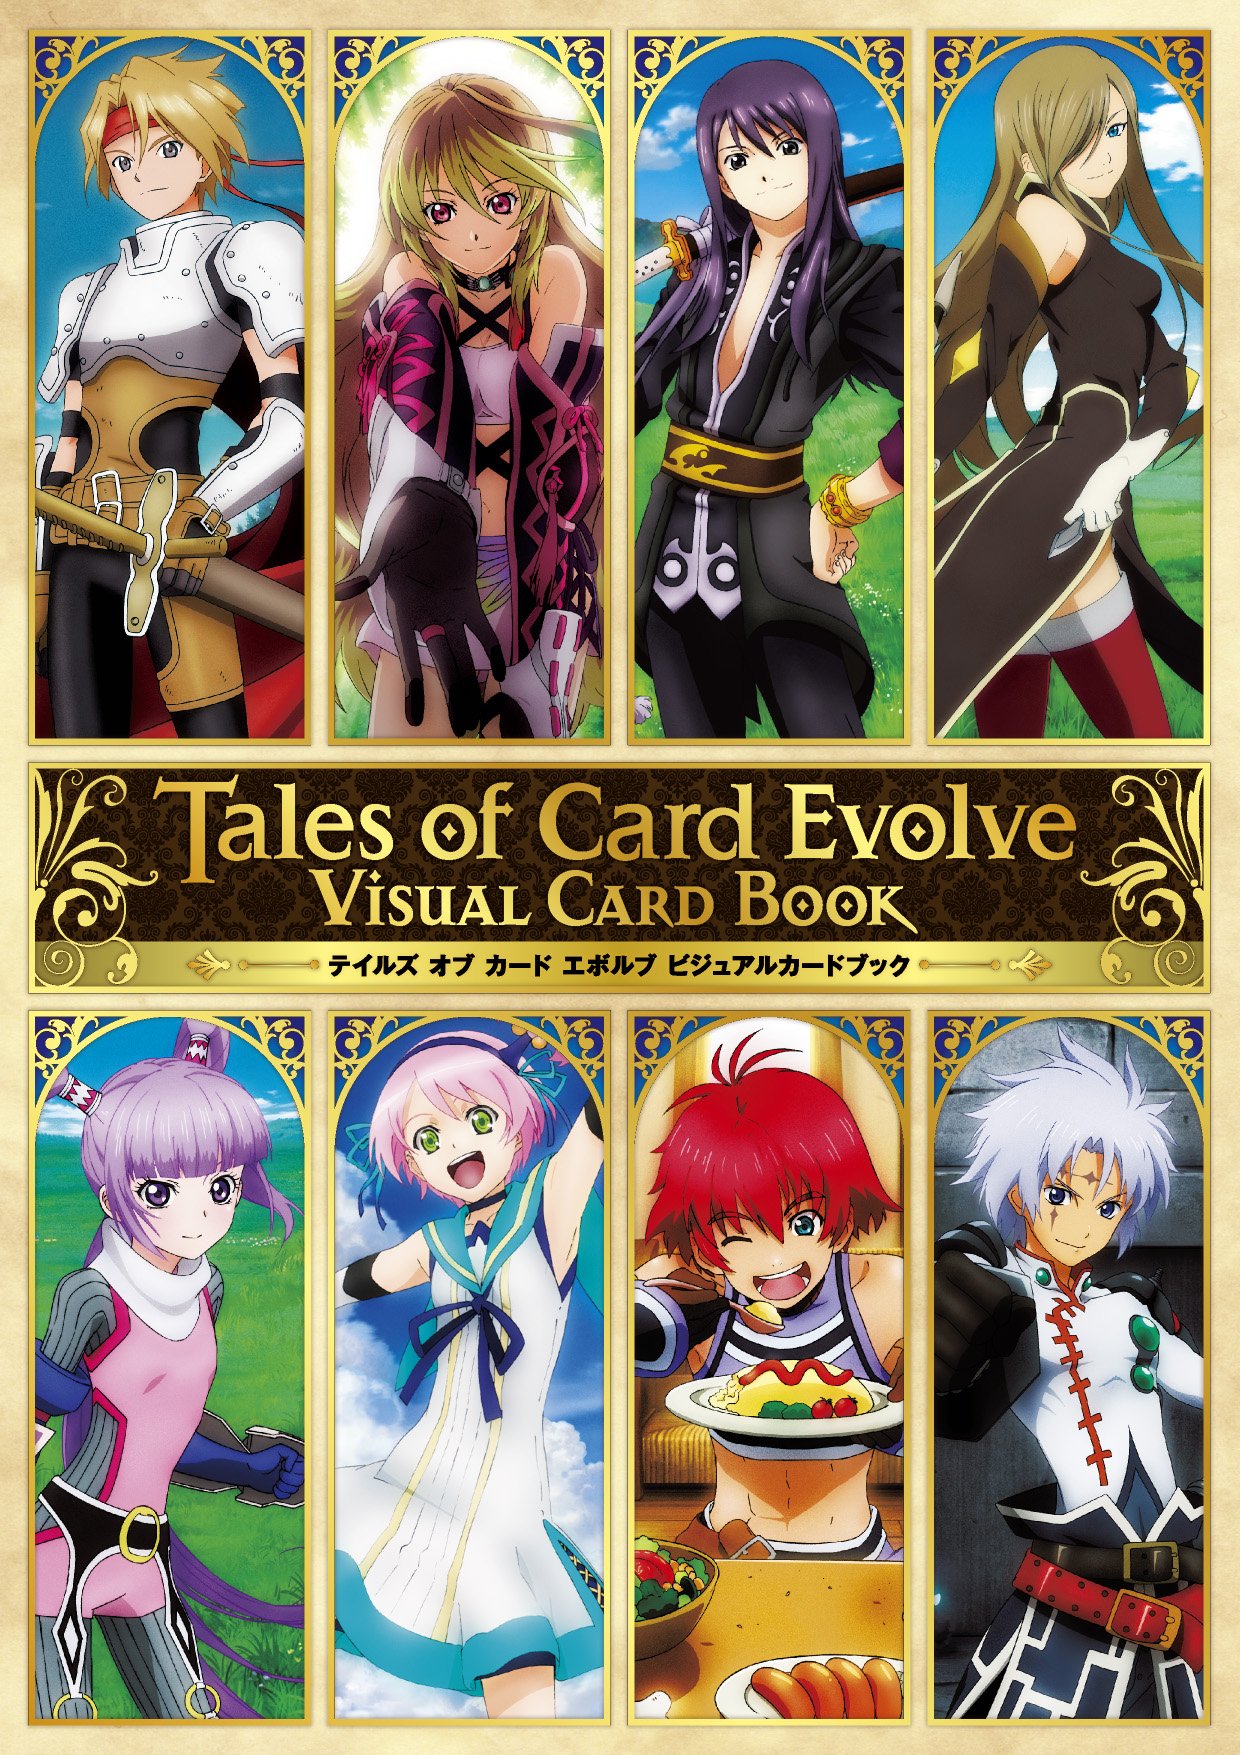 Tales of Card Evolve Visual Card Book
Keywords: cardevolve